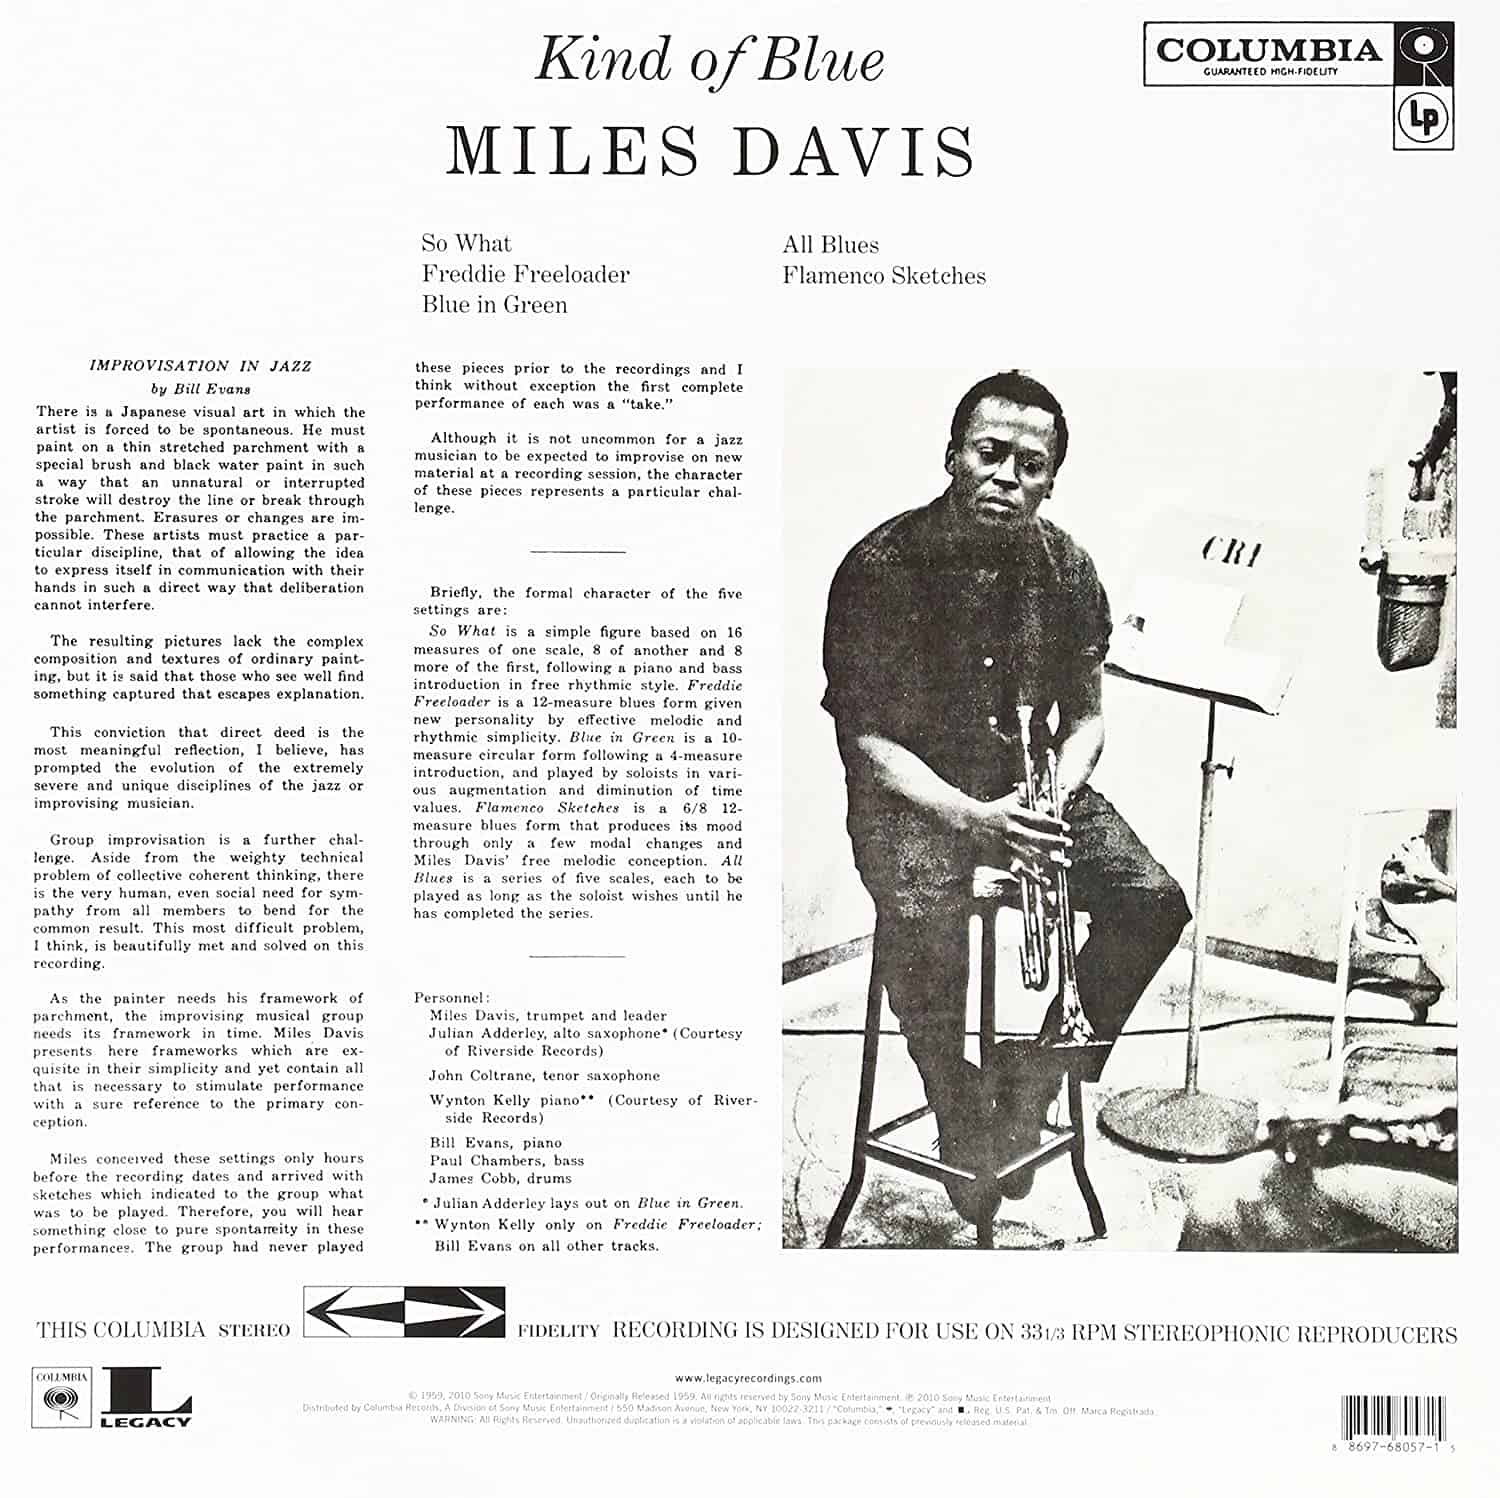 Miles-Davis-Kind-of-Blue-vinyl-LP-record-album-back